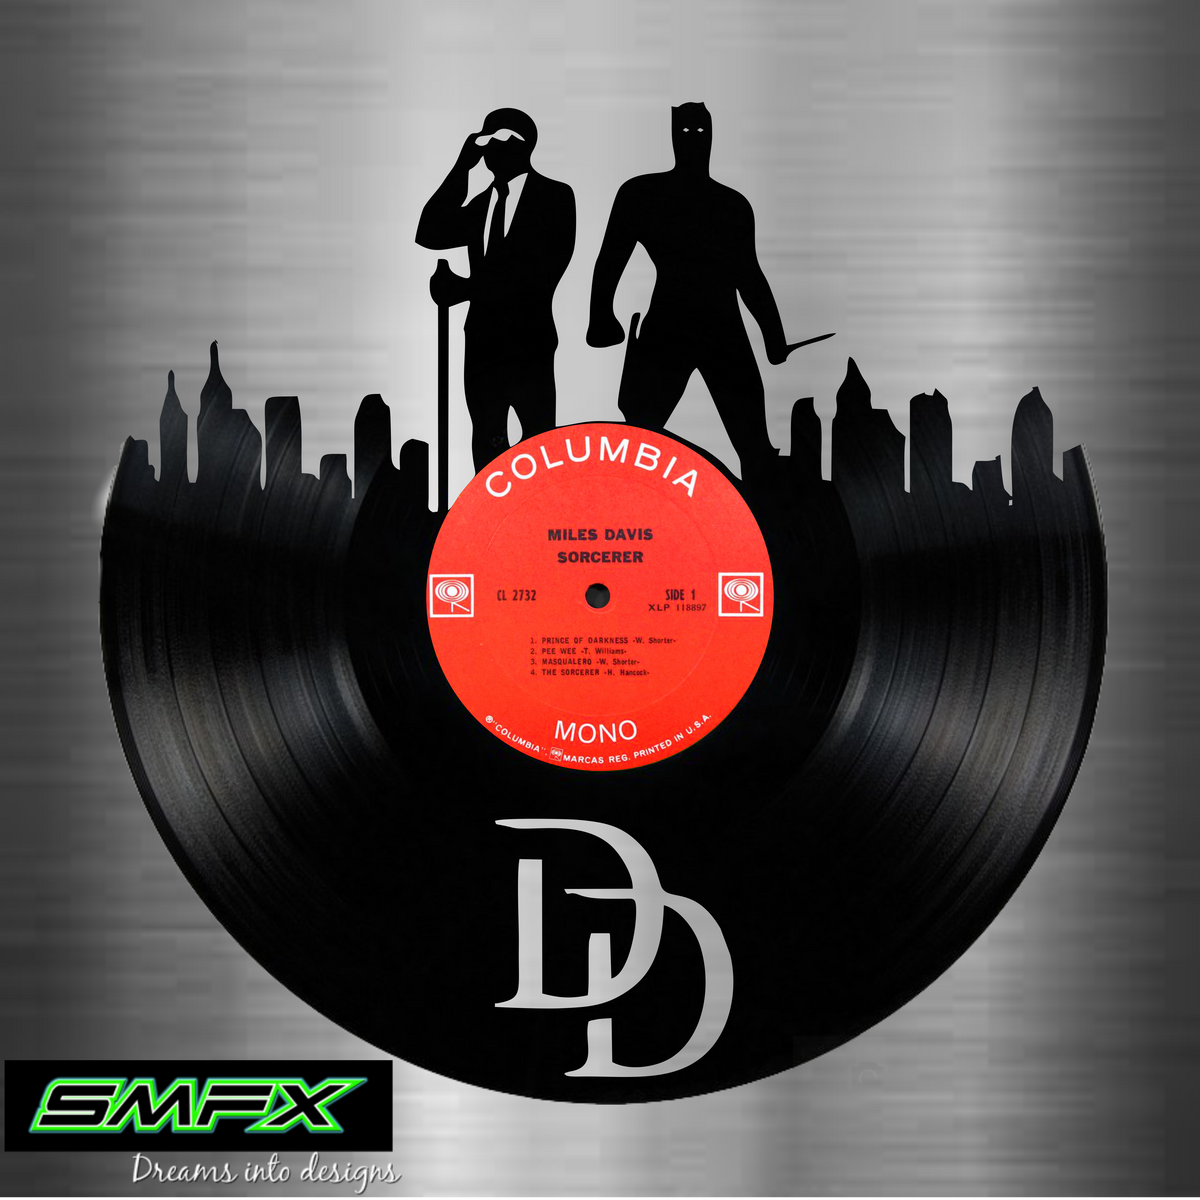 DAREDEVIL Laser Cut Vinyl Record artist representation or vinyl clock — SMFX  Designs